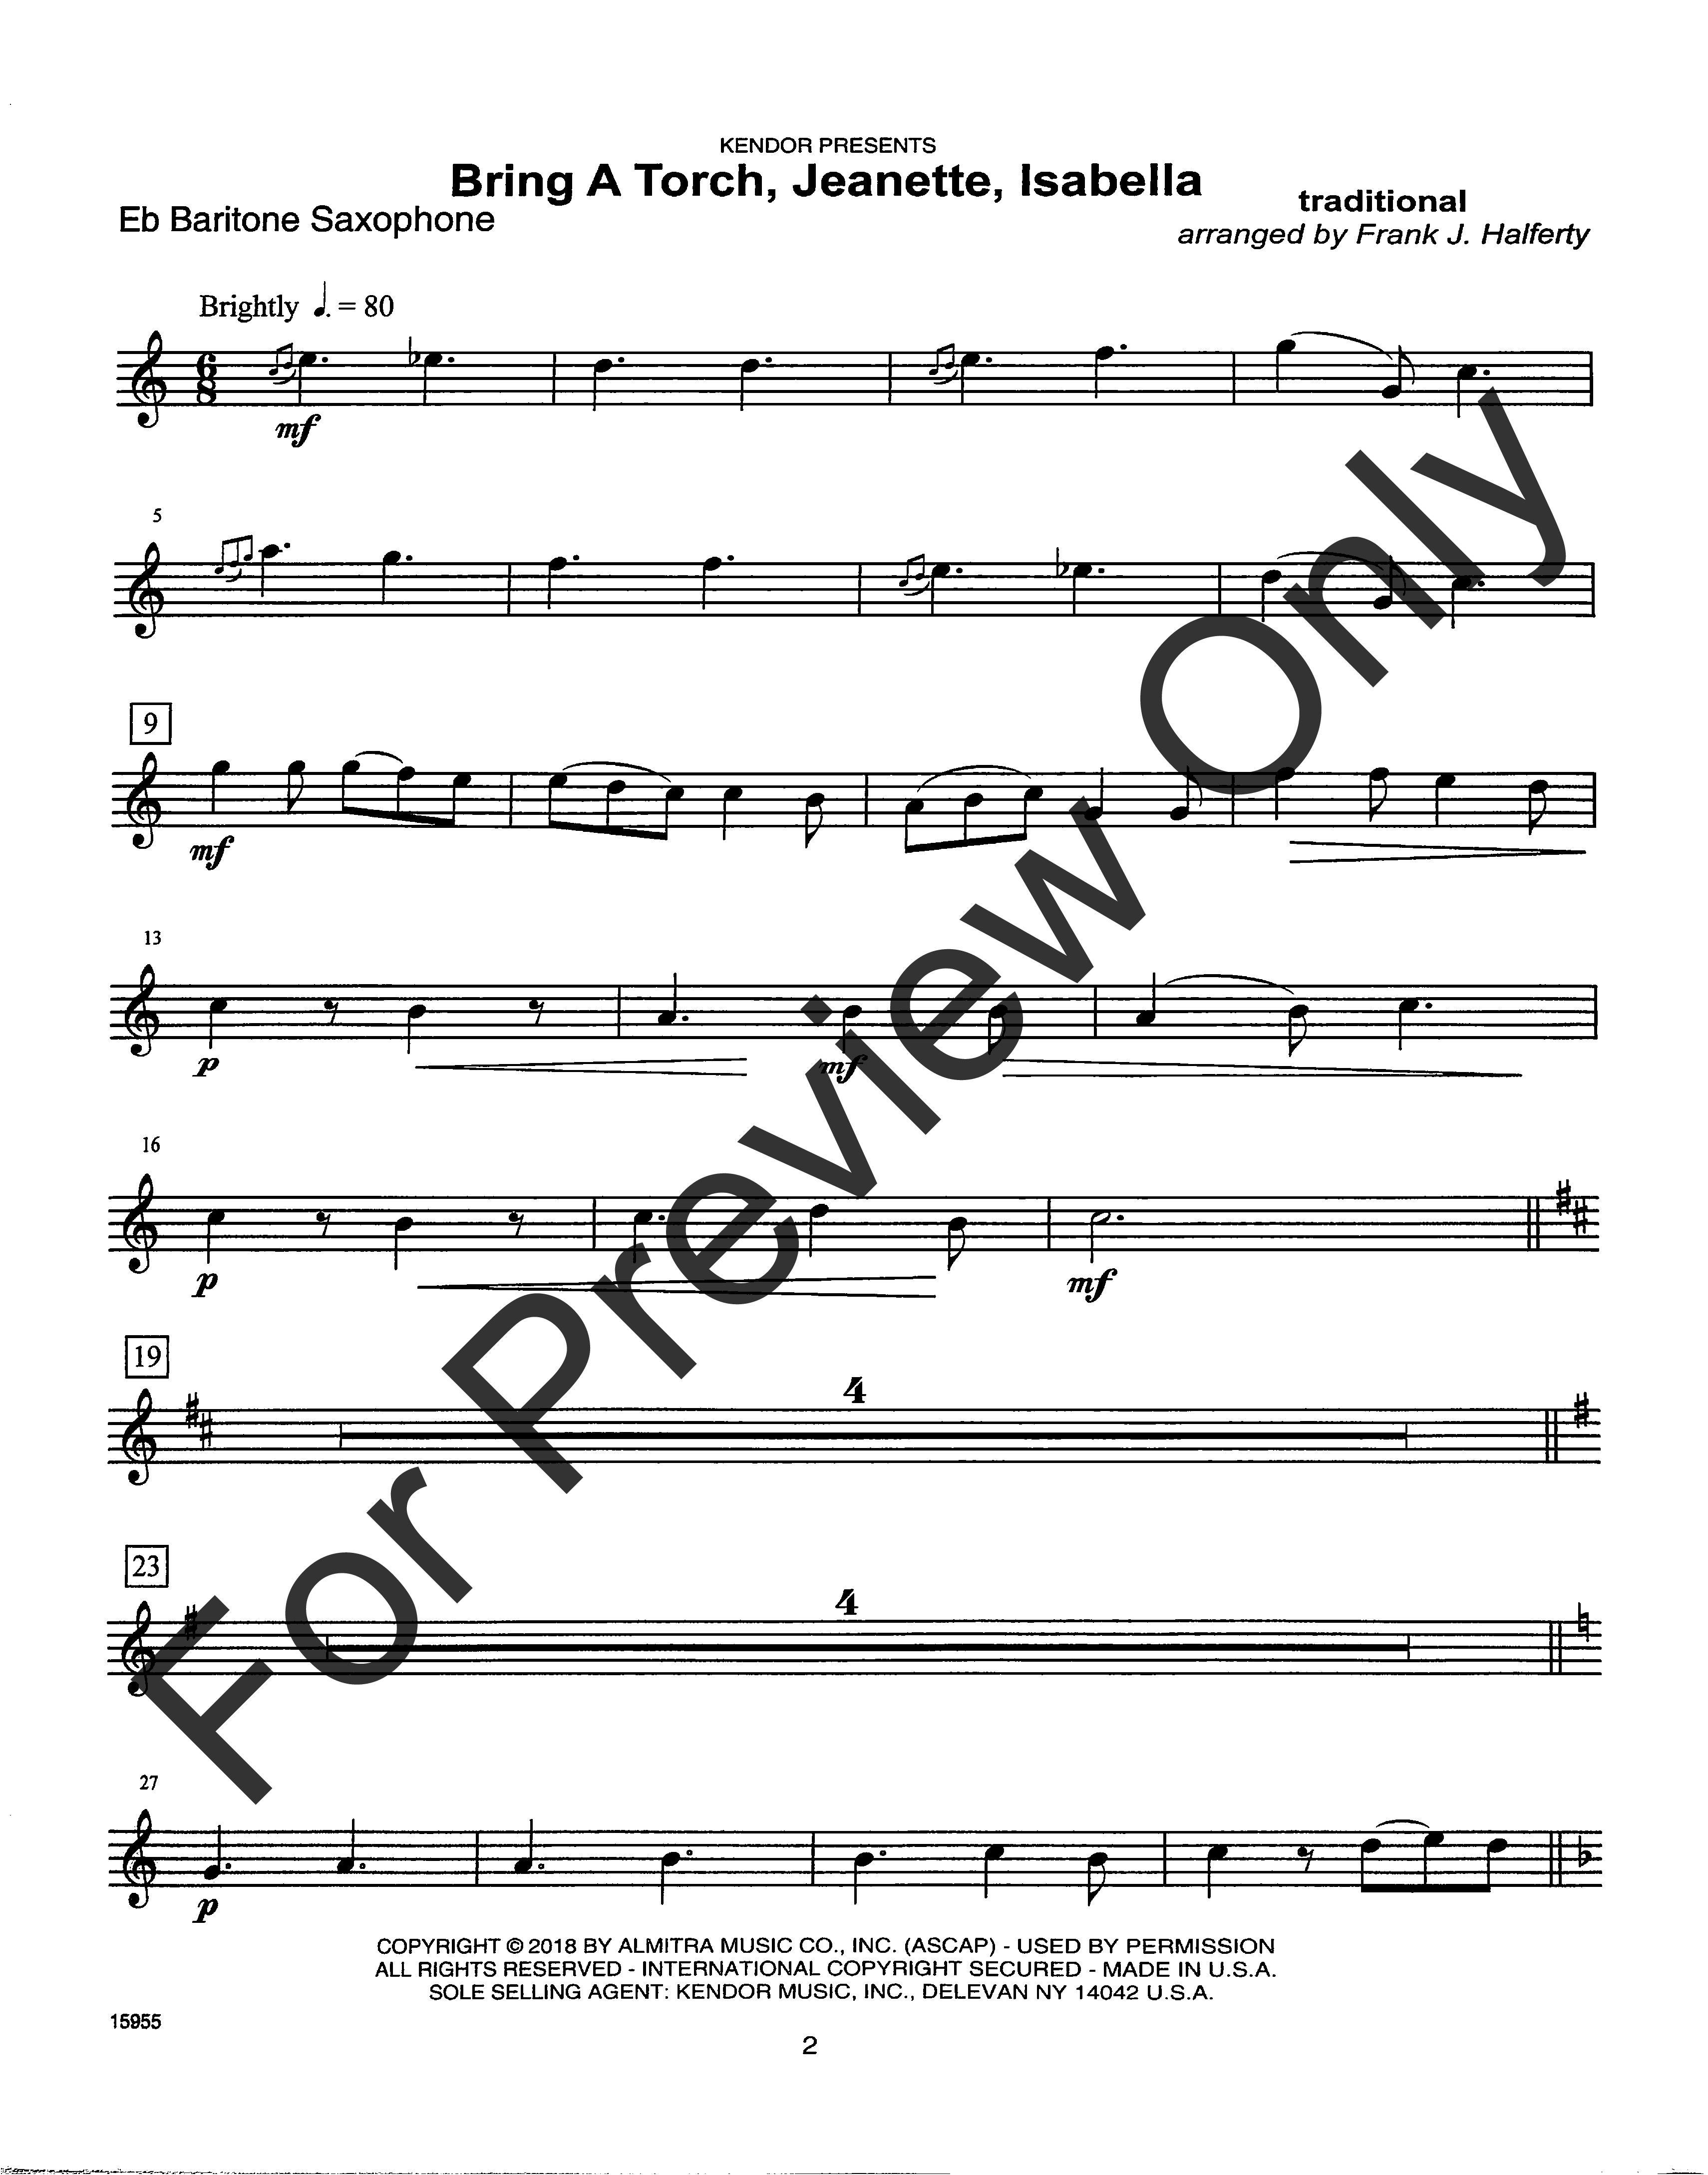 Christmas Classics for Saxophone Quartet Bari Sax Book